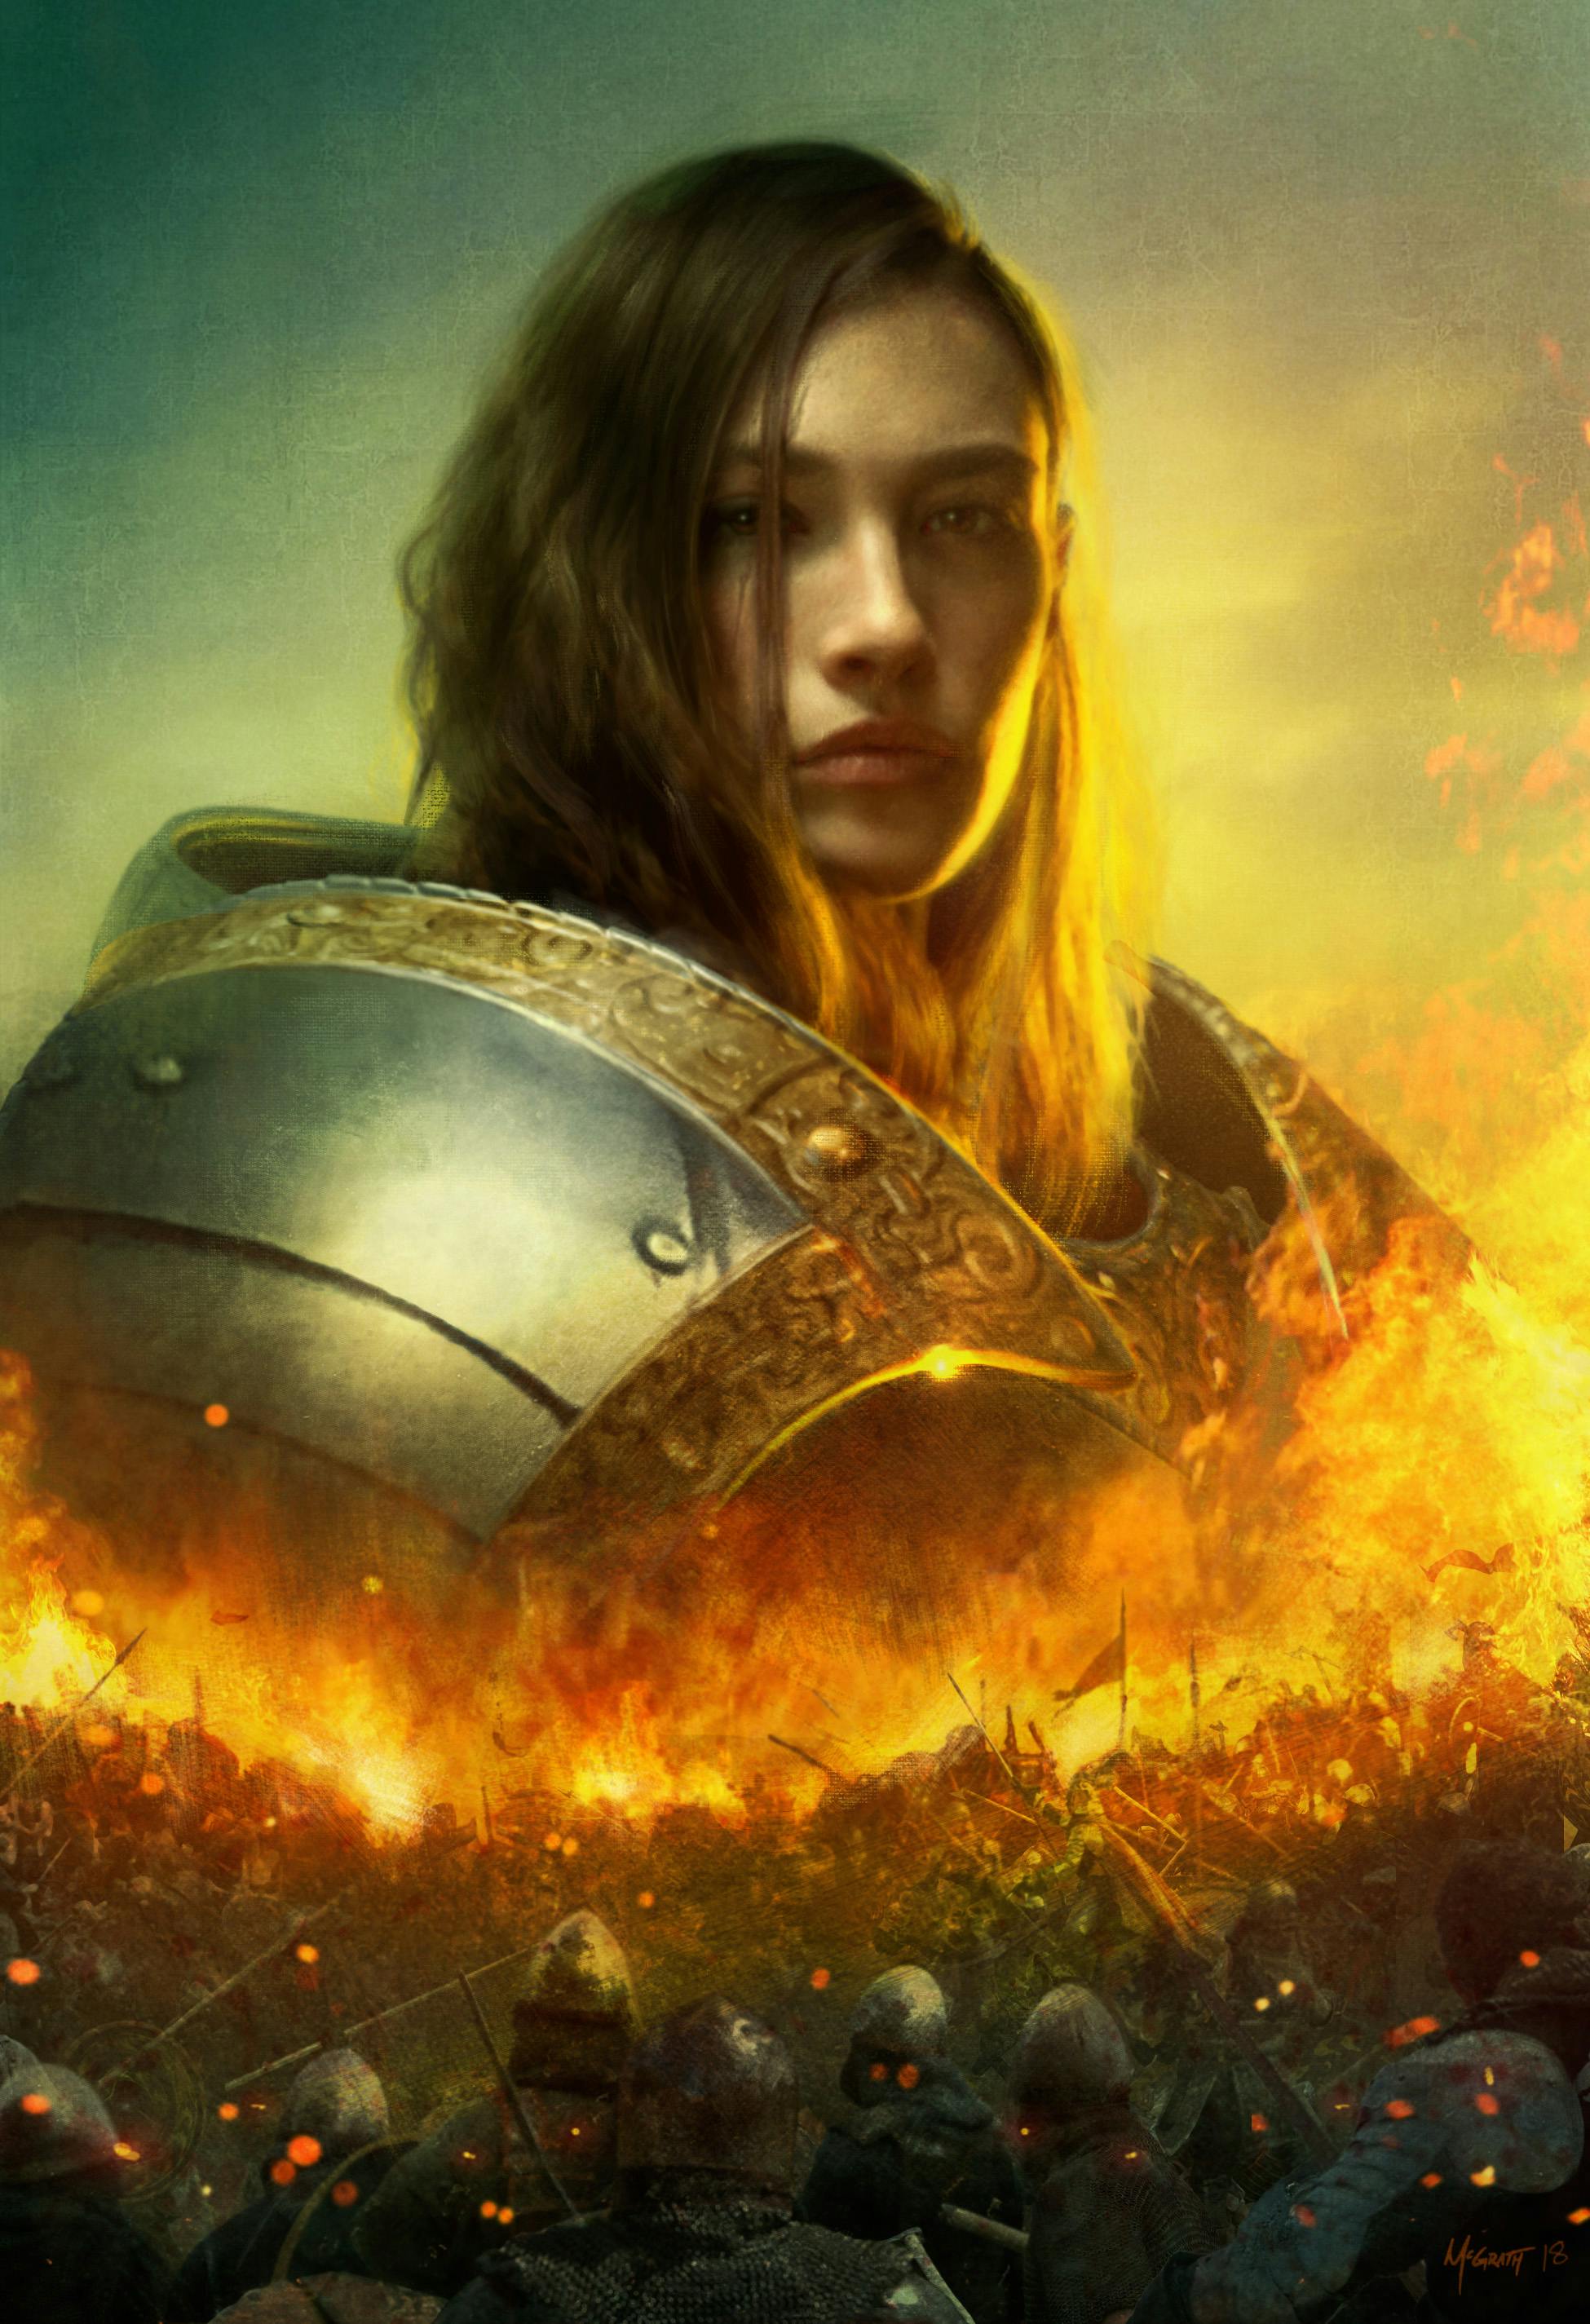 A warrior woman above a field of fiery war